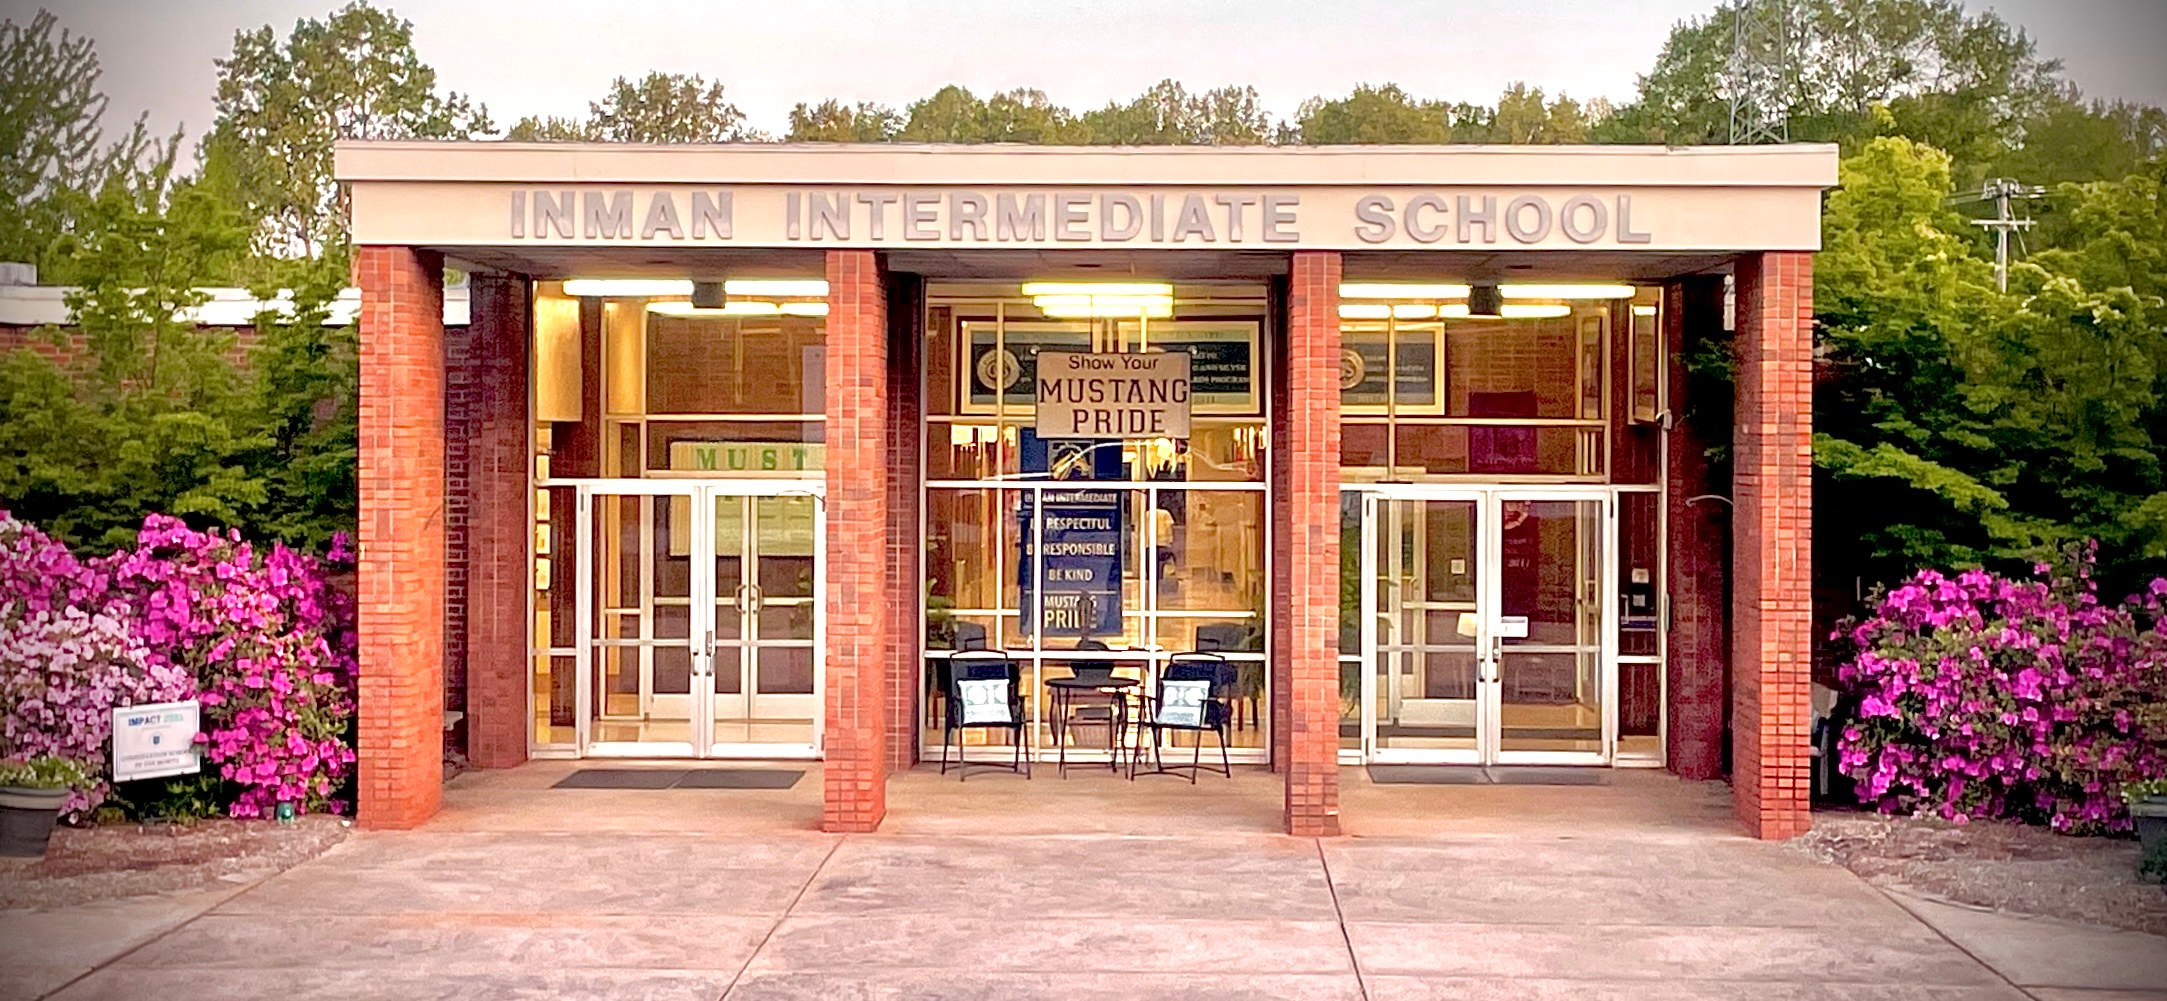 Inman Intermediate School